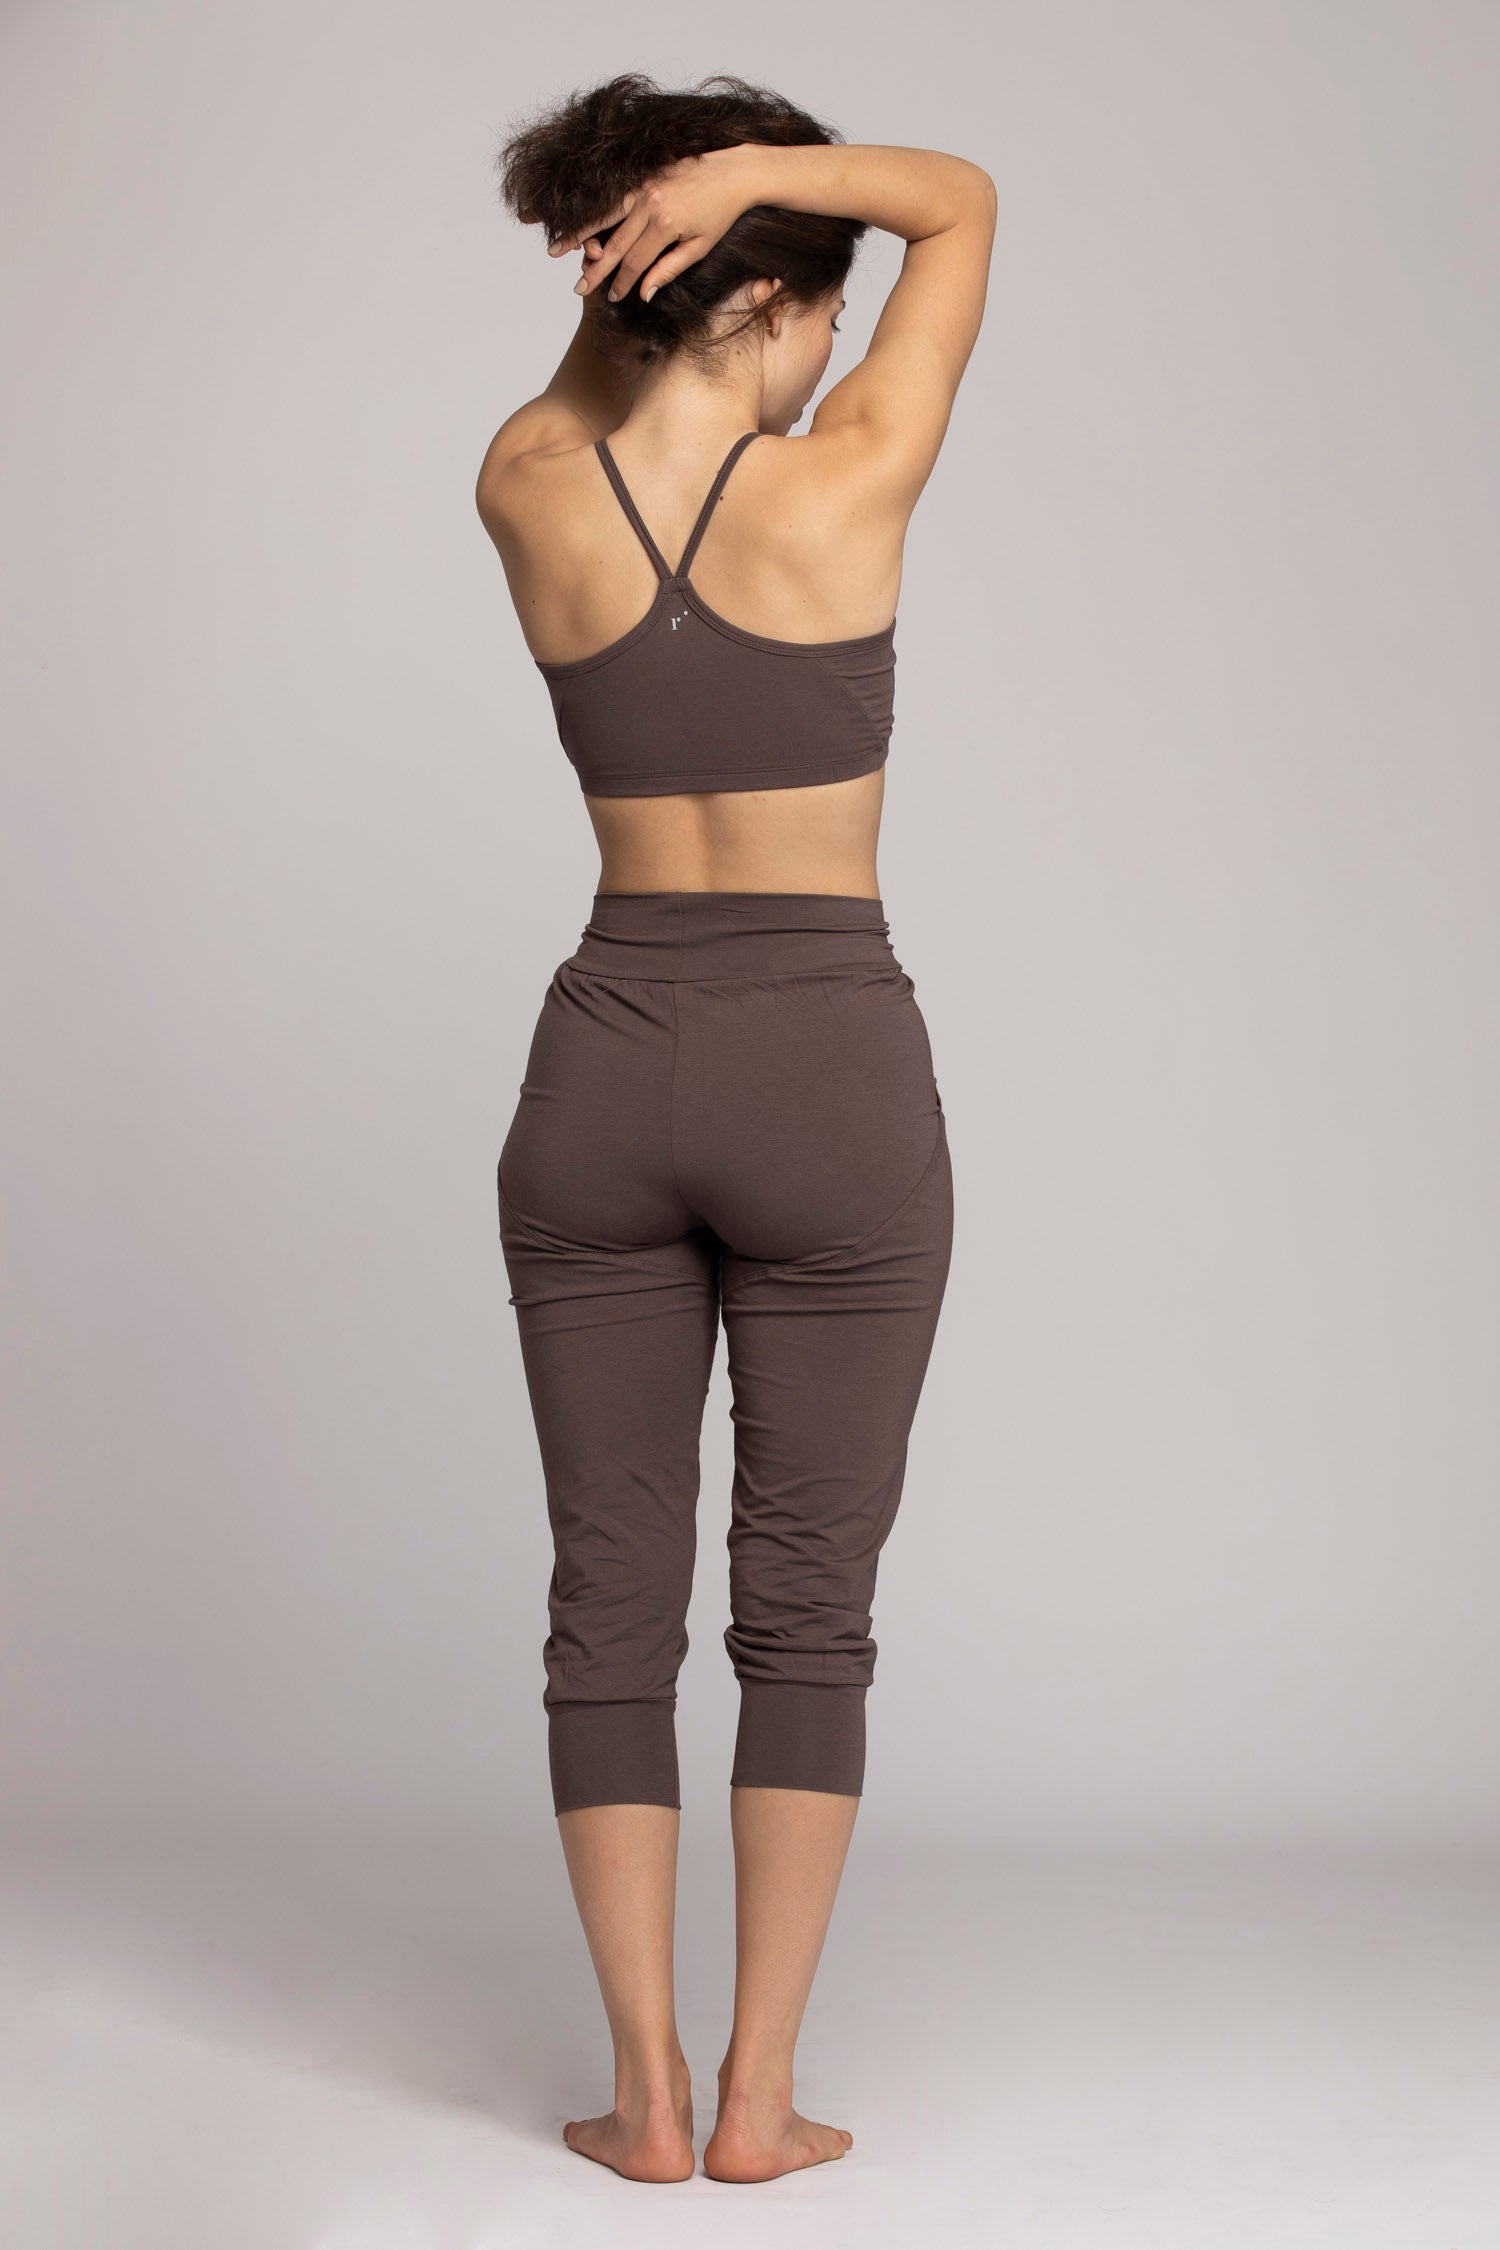 Loose Yoga Pants - Soft Modal Spandex Zen Clothes